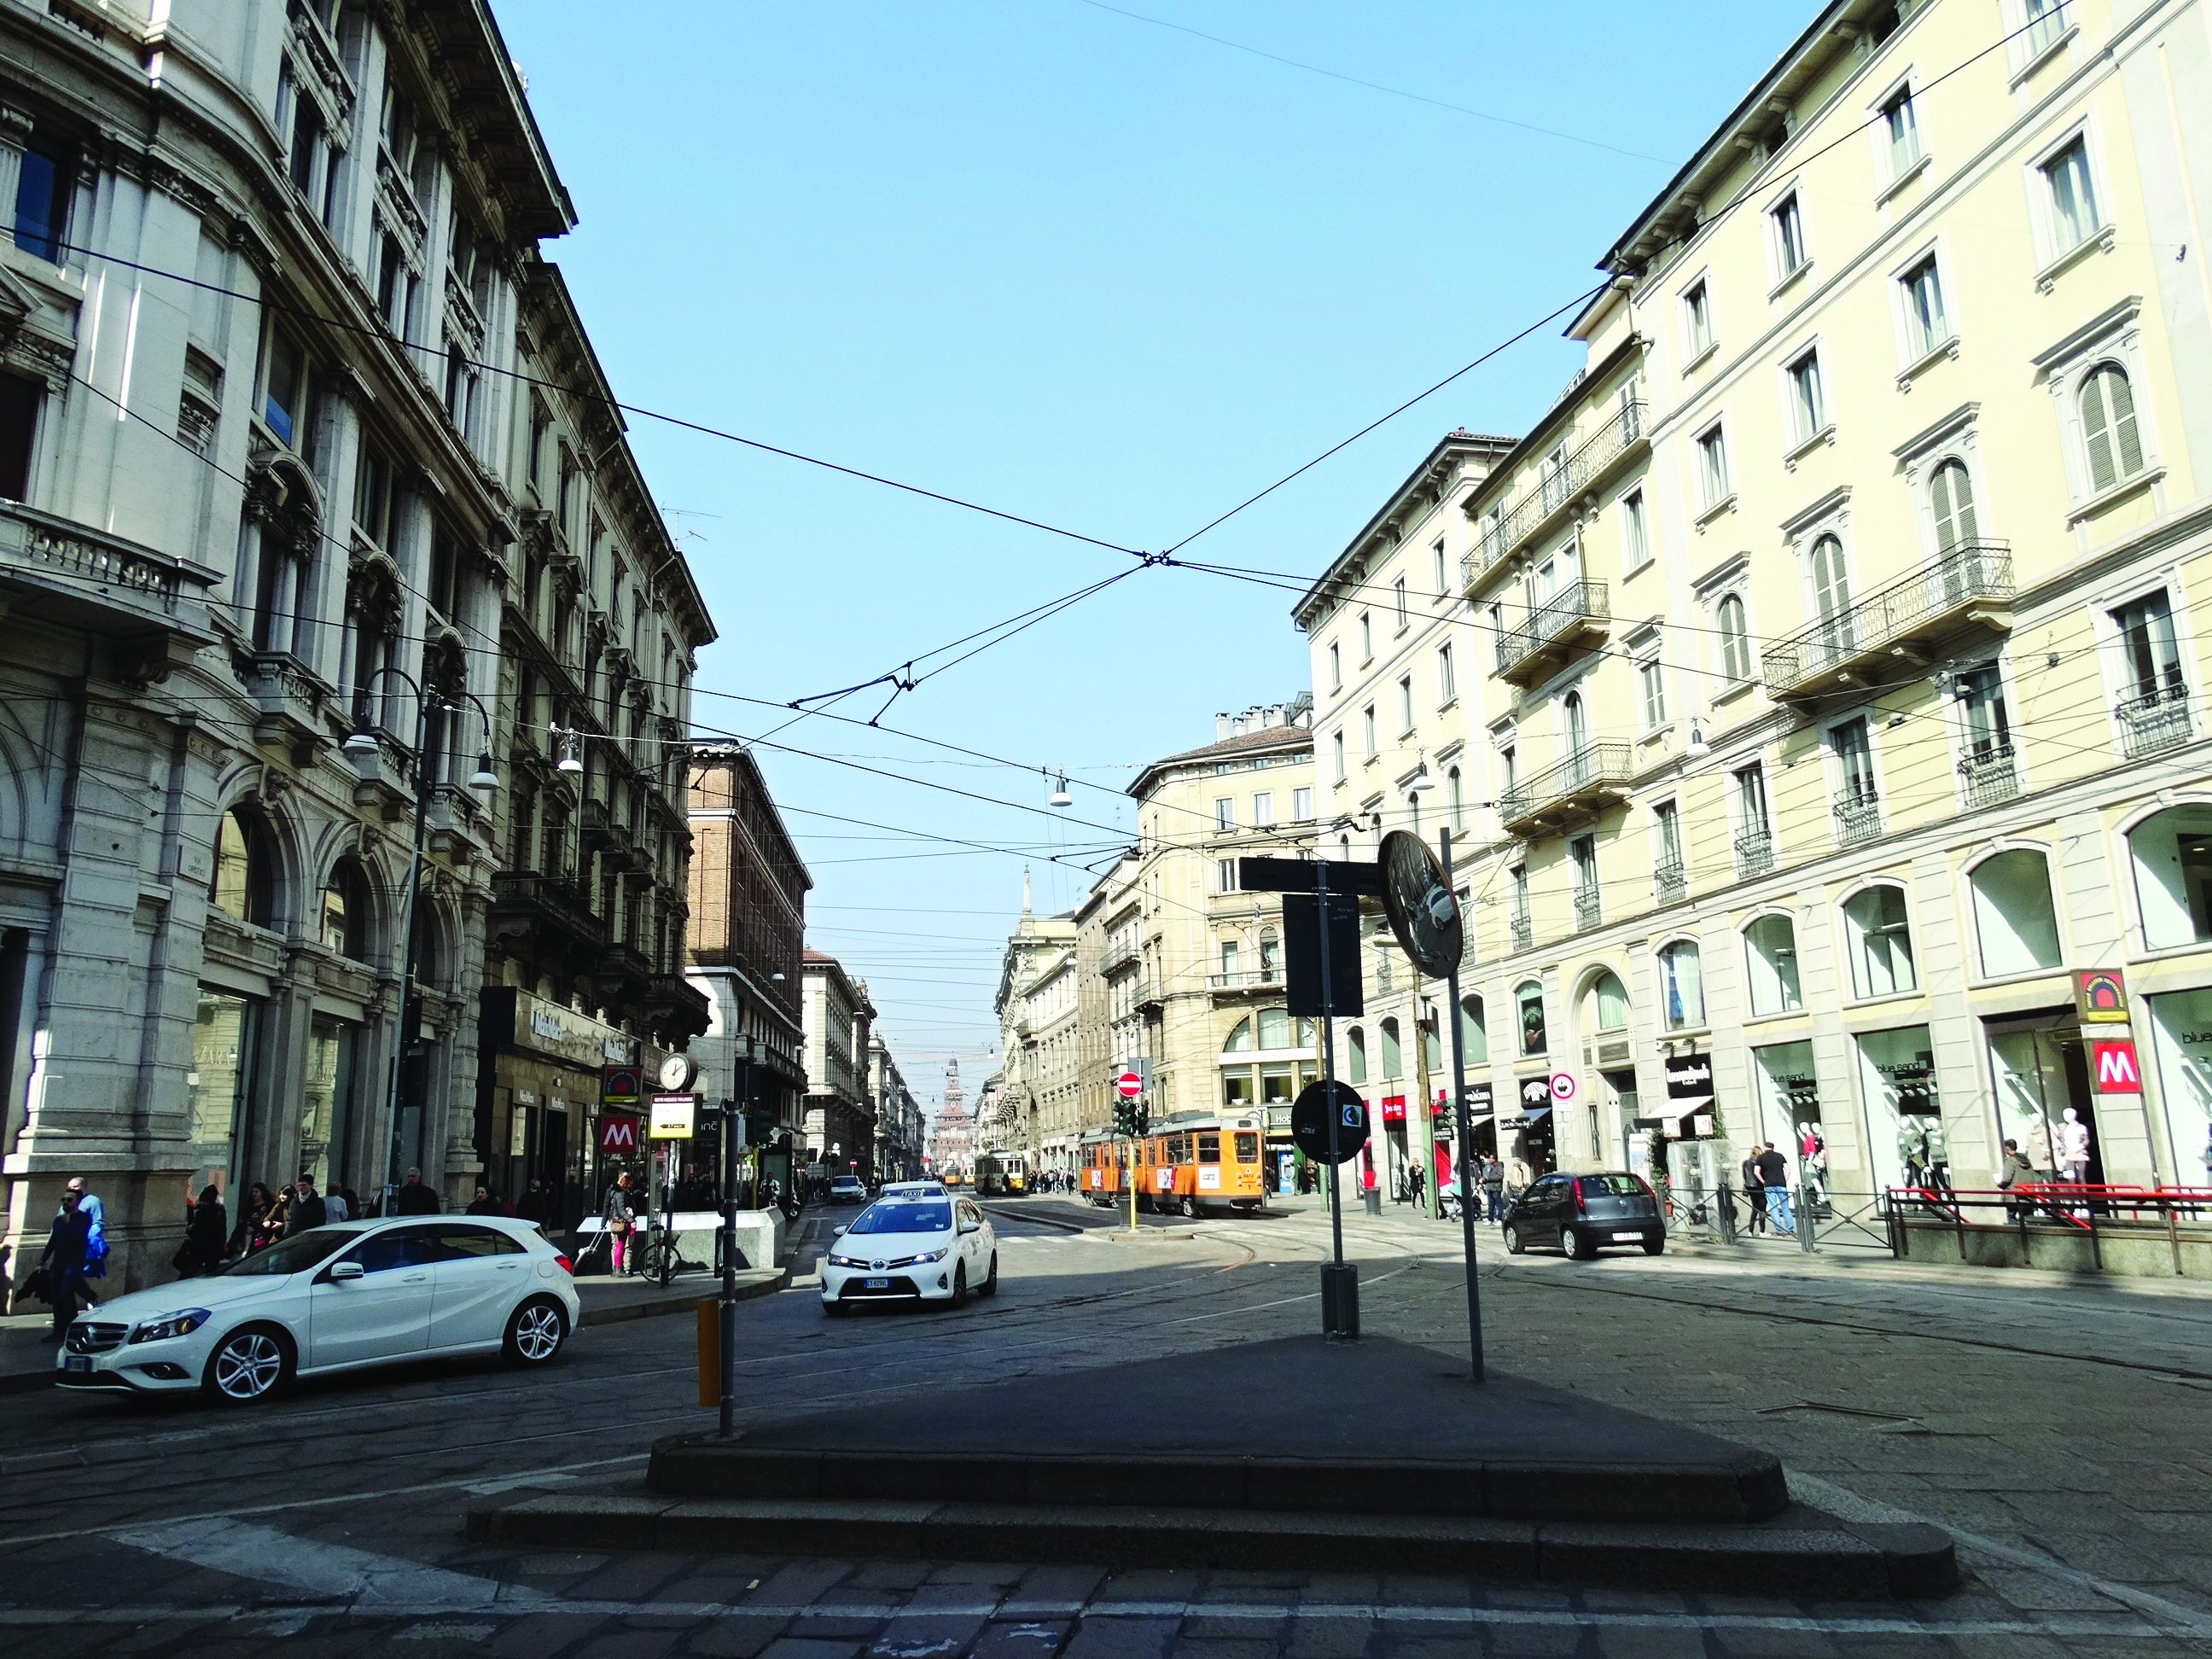 Milan: An Exquisite, Alpha Global City